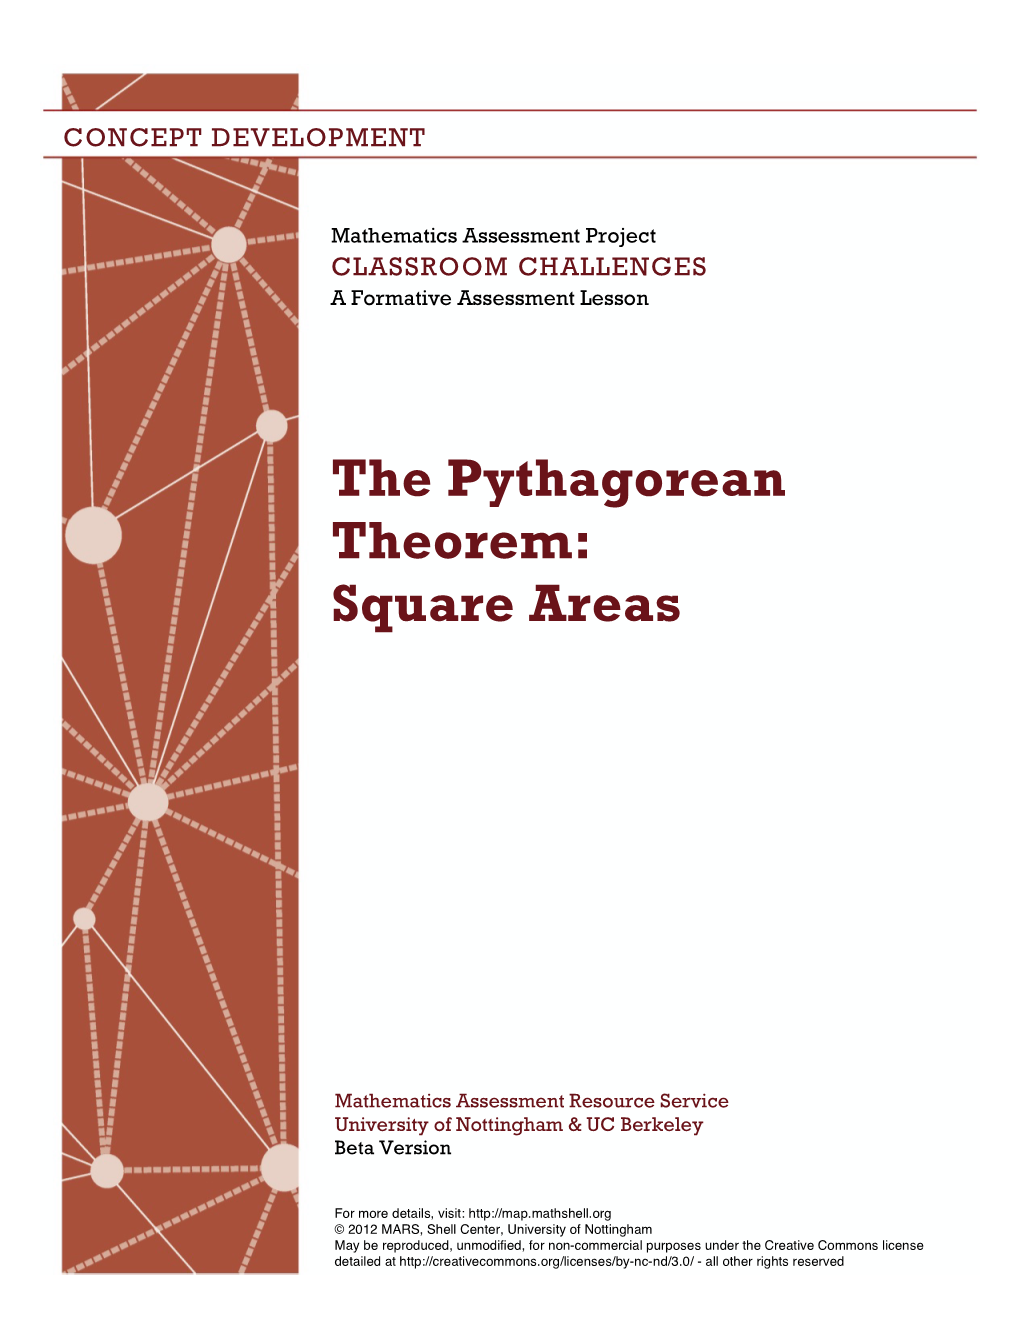 The Pythagorean Theorem: Square Areas